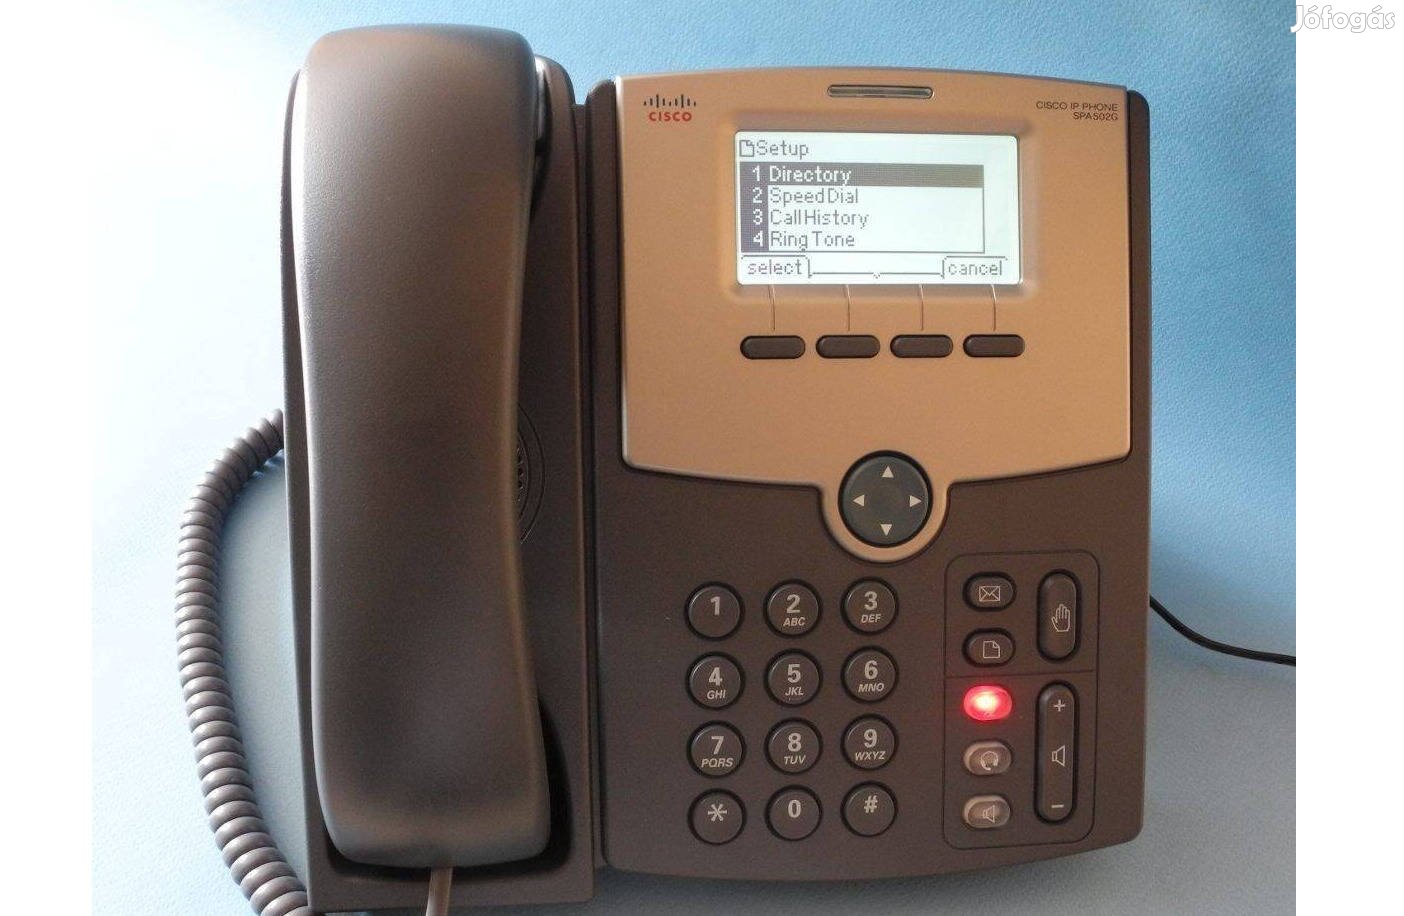 Linksys Cisco Spa 502G VOIP telefonok akciós áron!